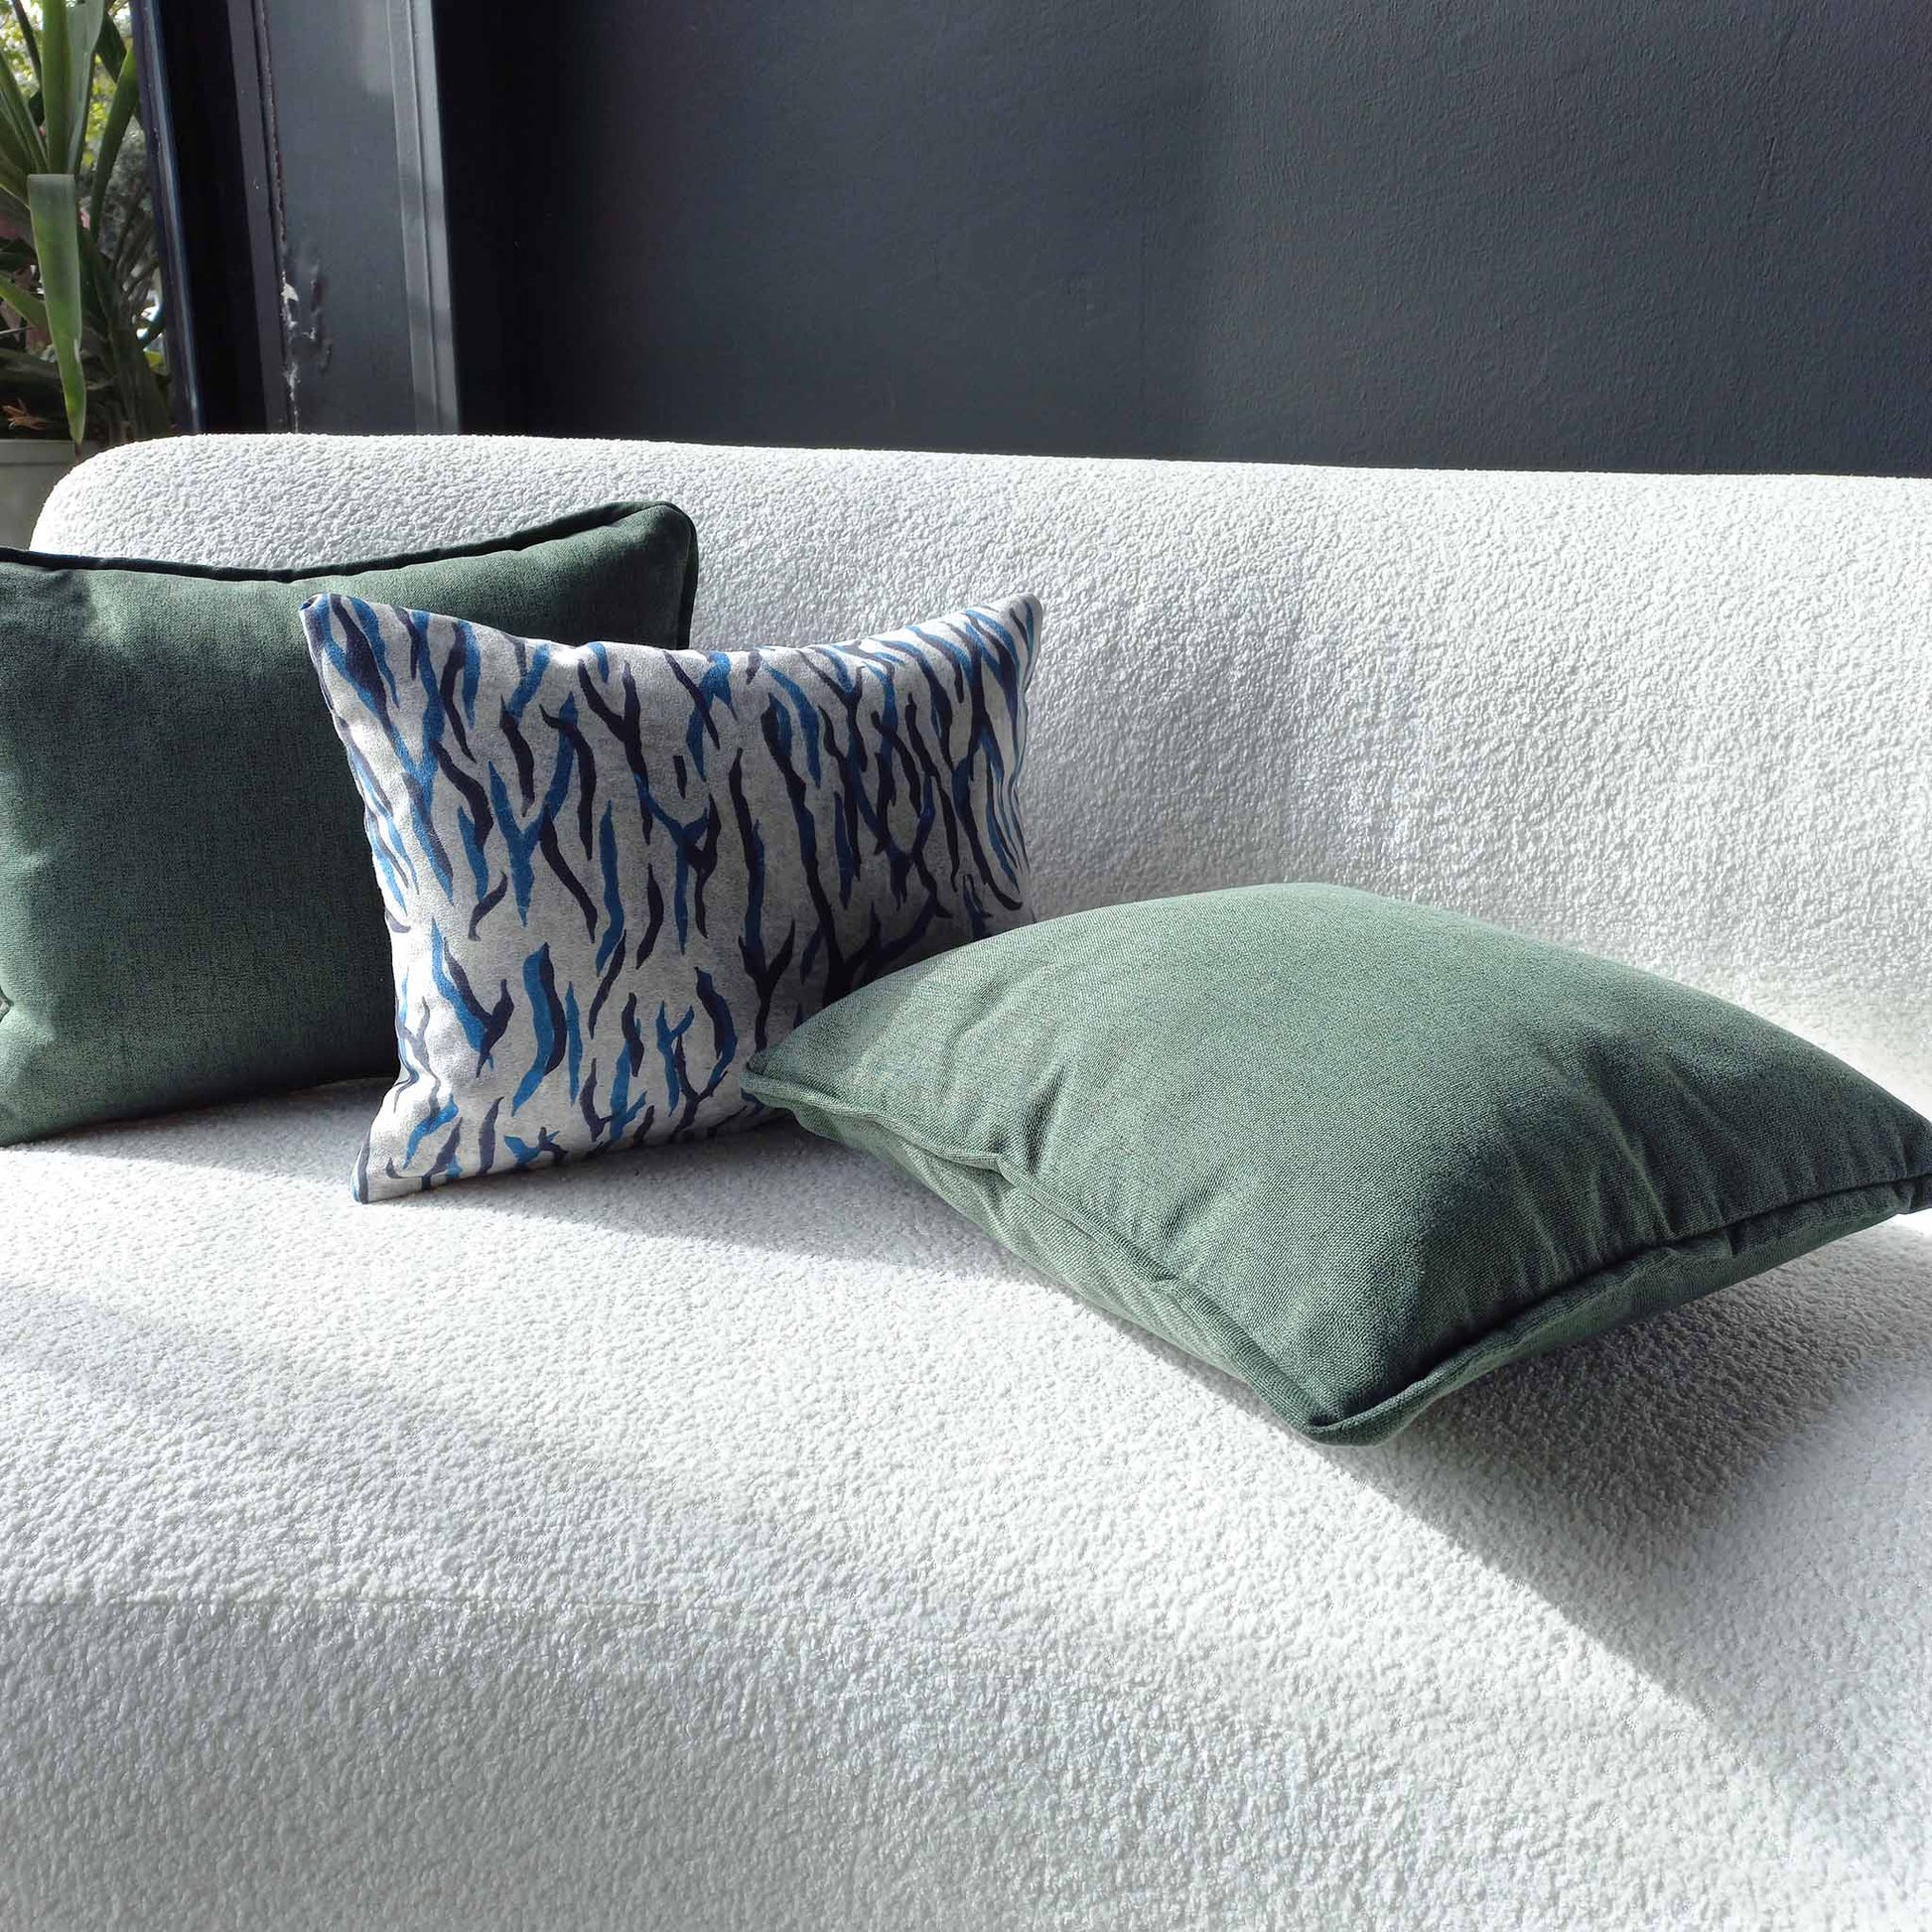 Decorative cushions on a sofa